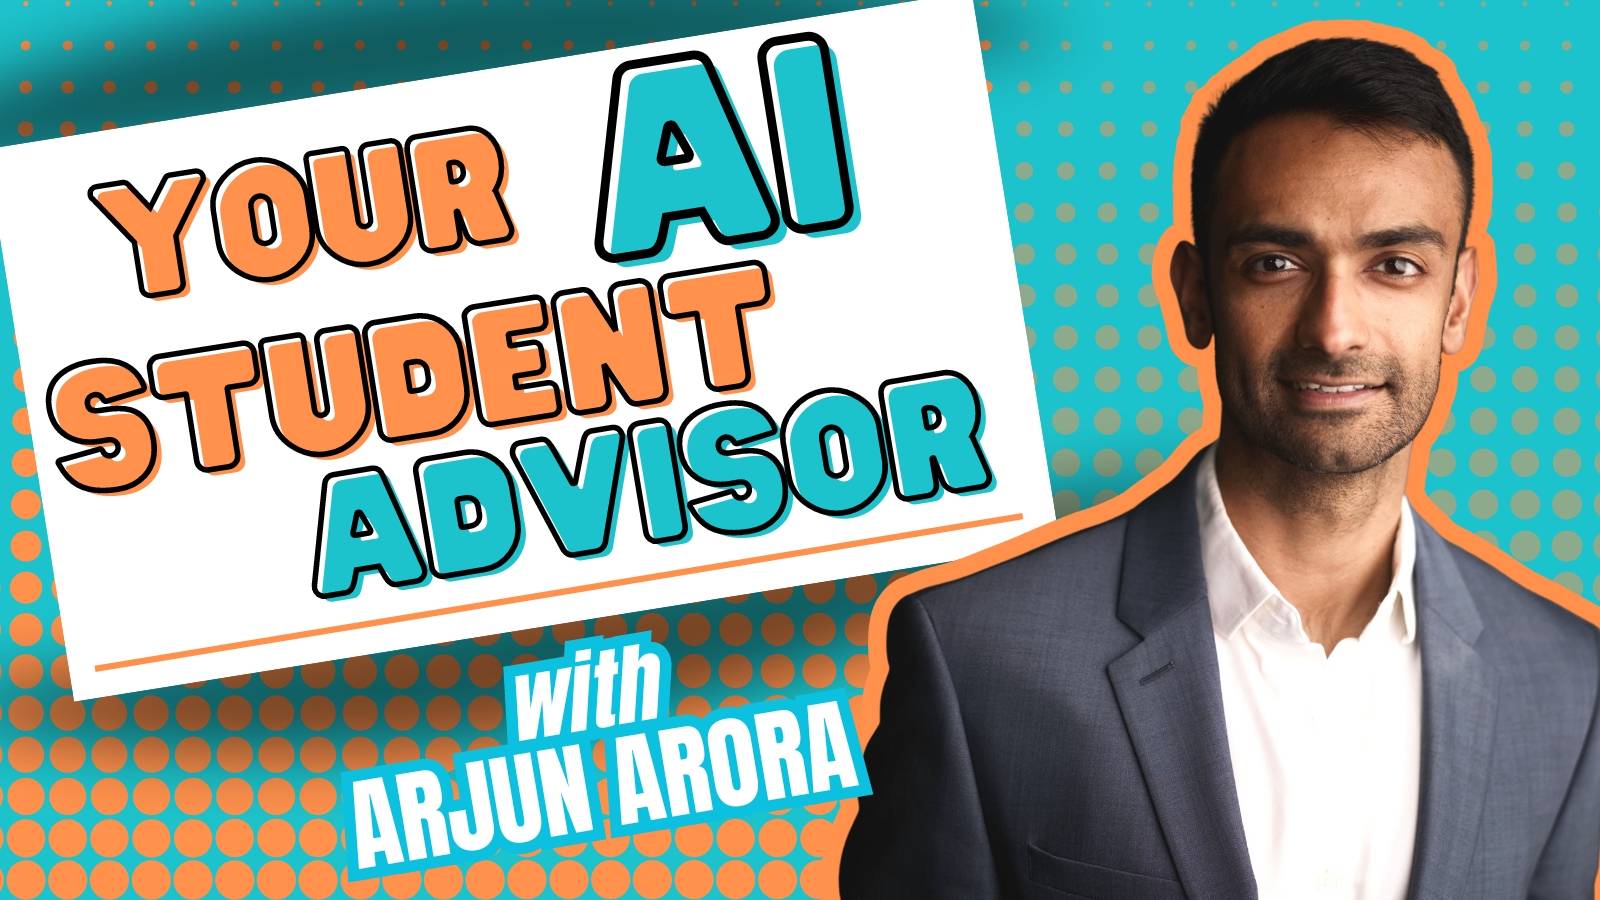 Meet Kelly Your AI Student Advisor with Arjun Arora from Advisor AI